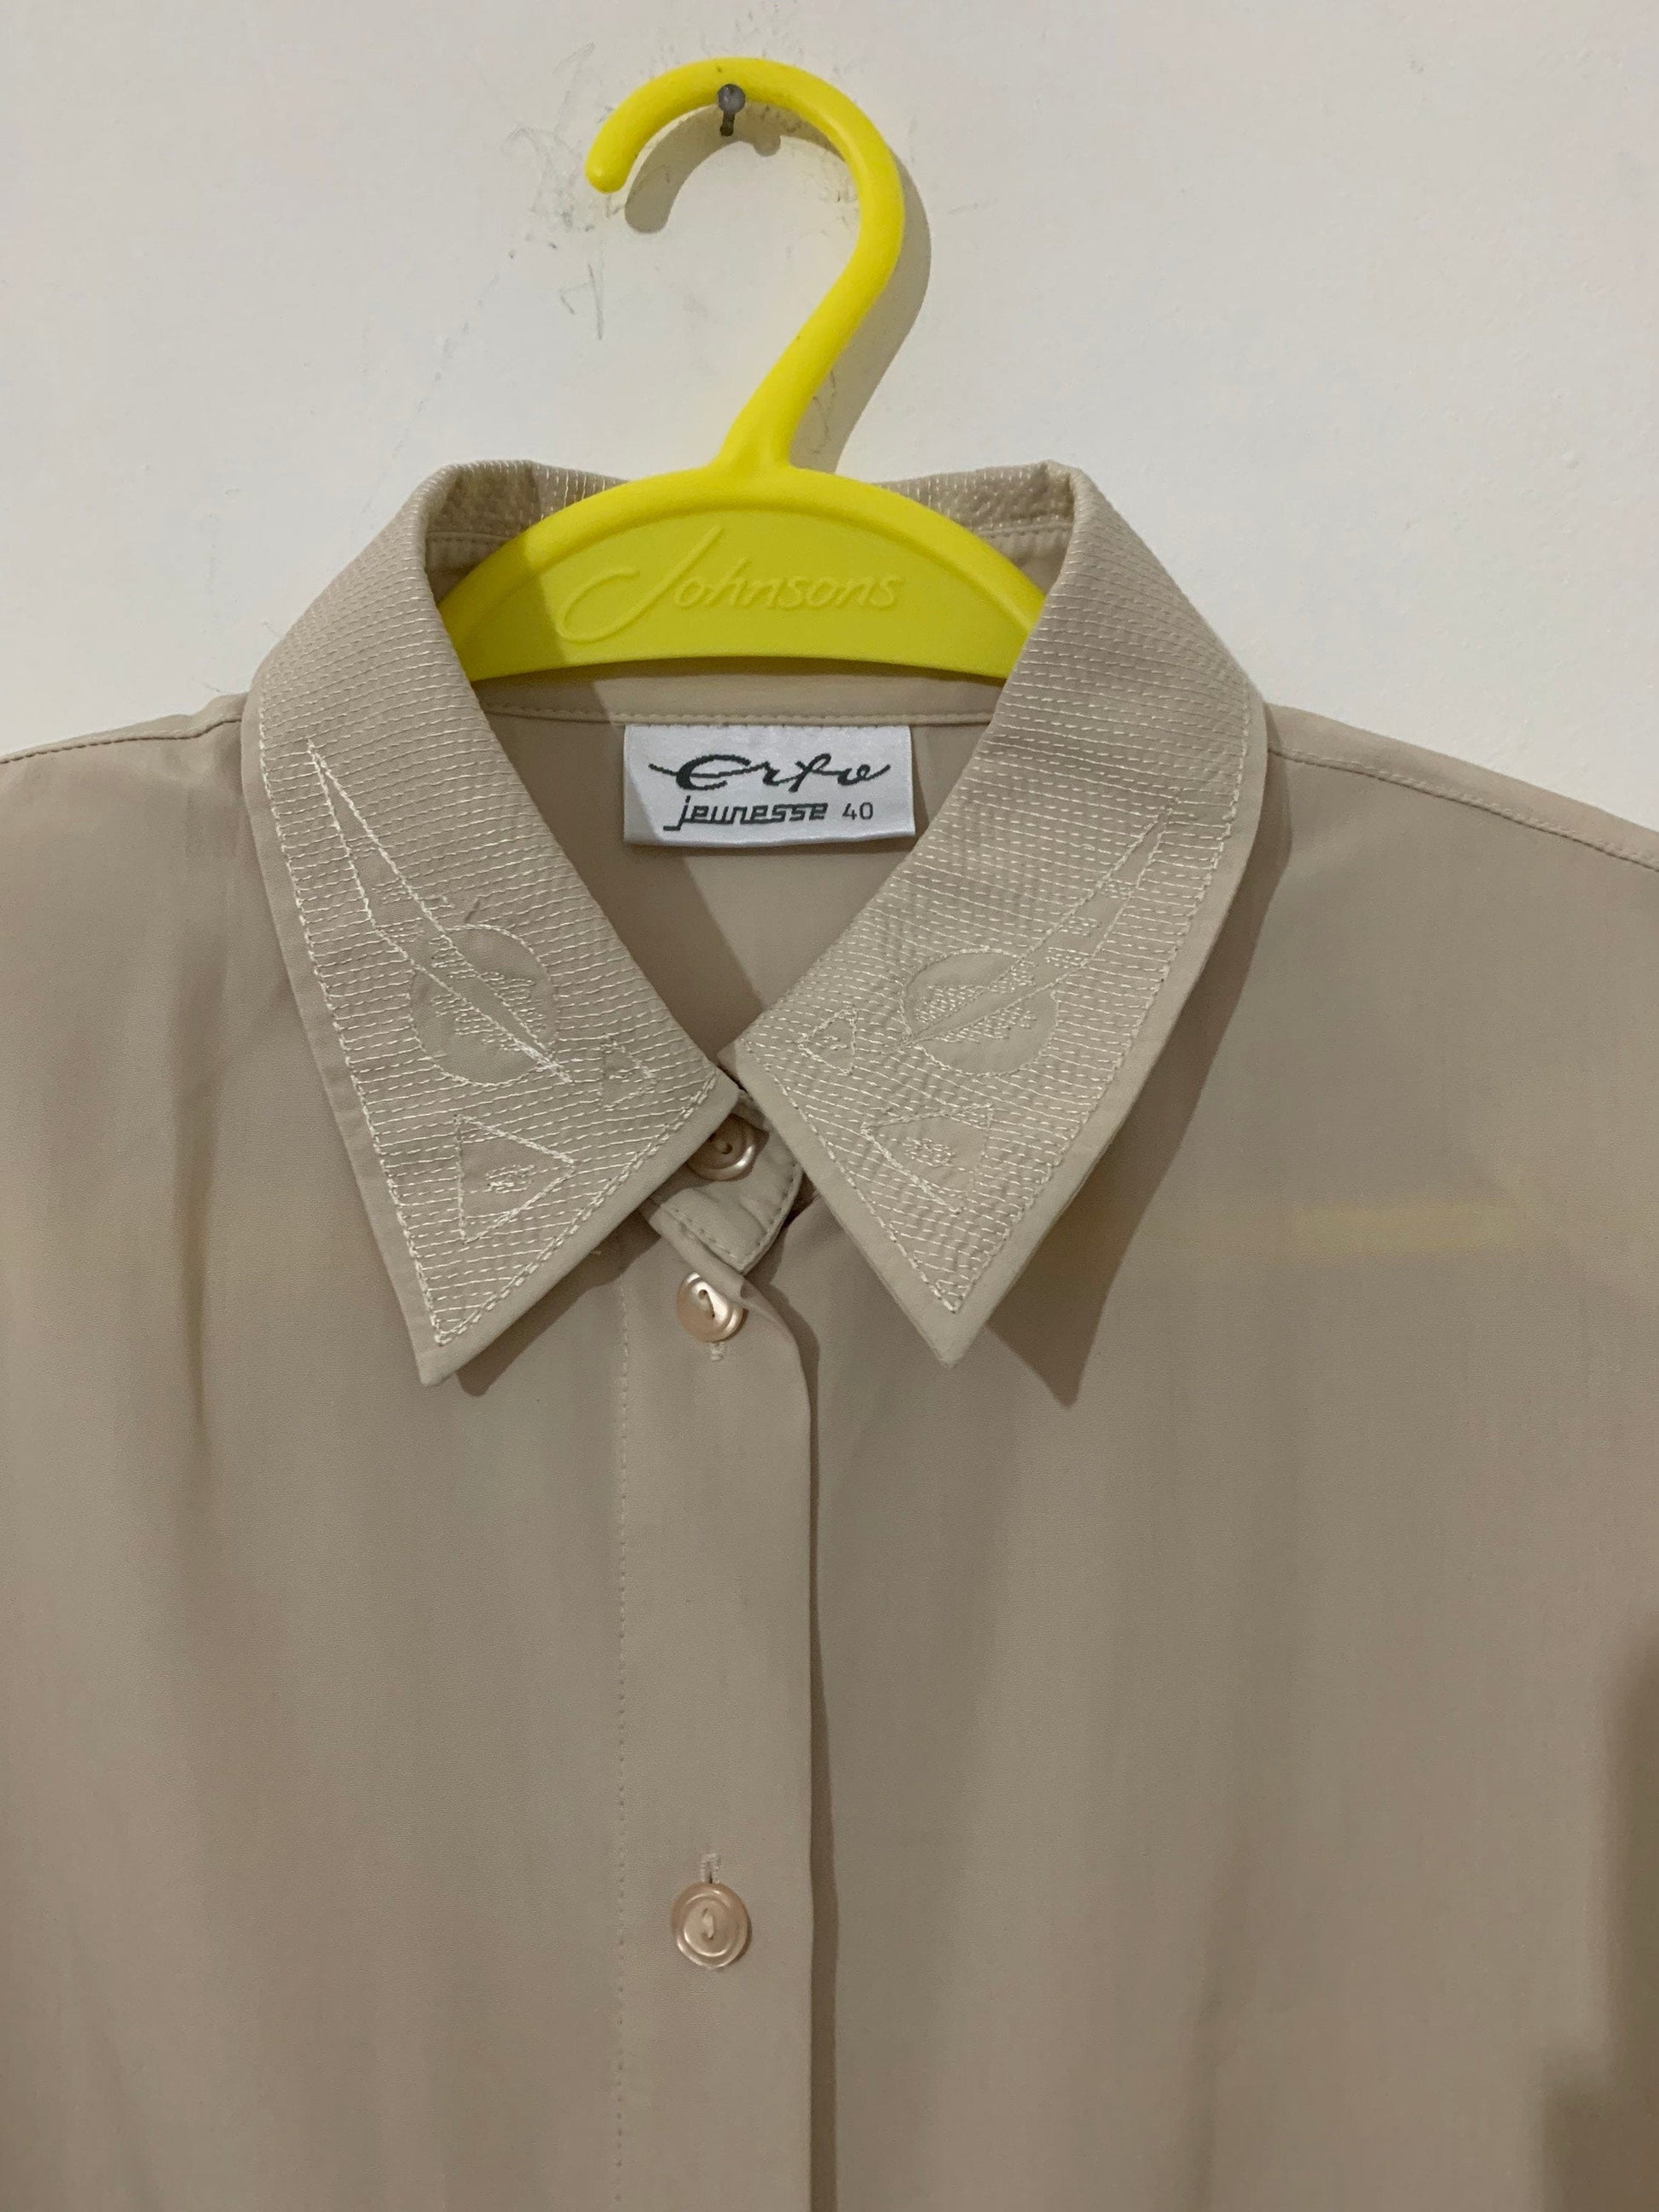 Vintage Blouse - beige long sleeve  - Voluminous Sleeve shirt 12-14